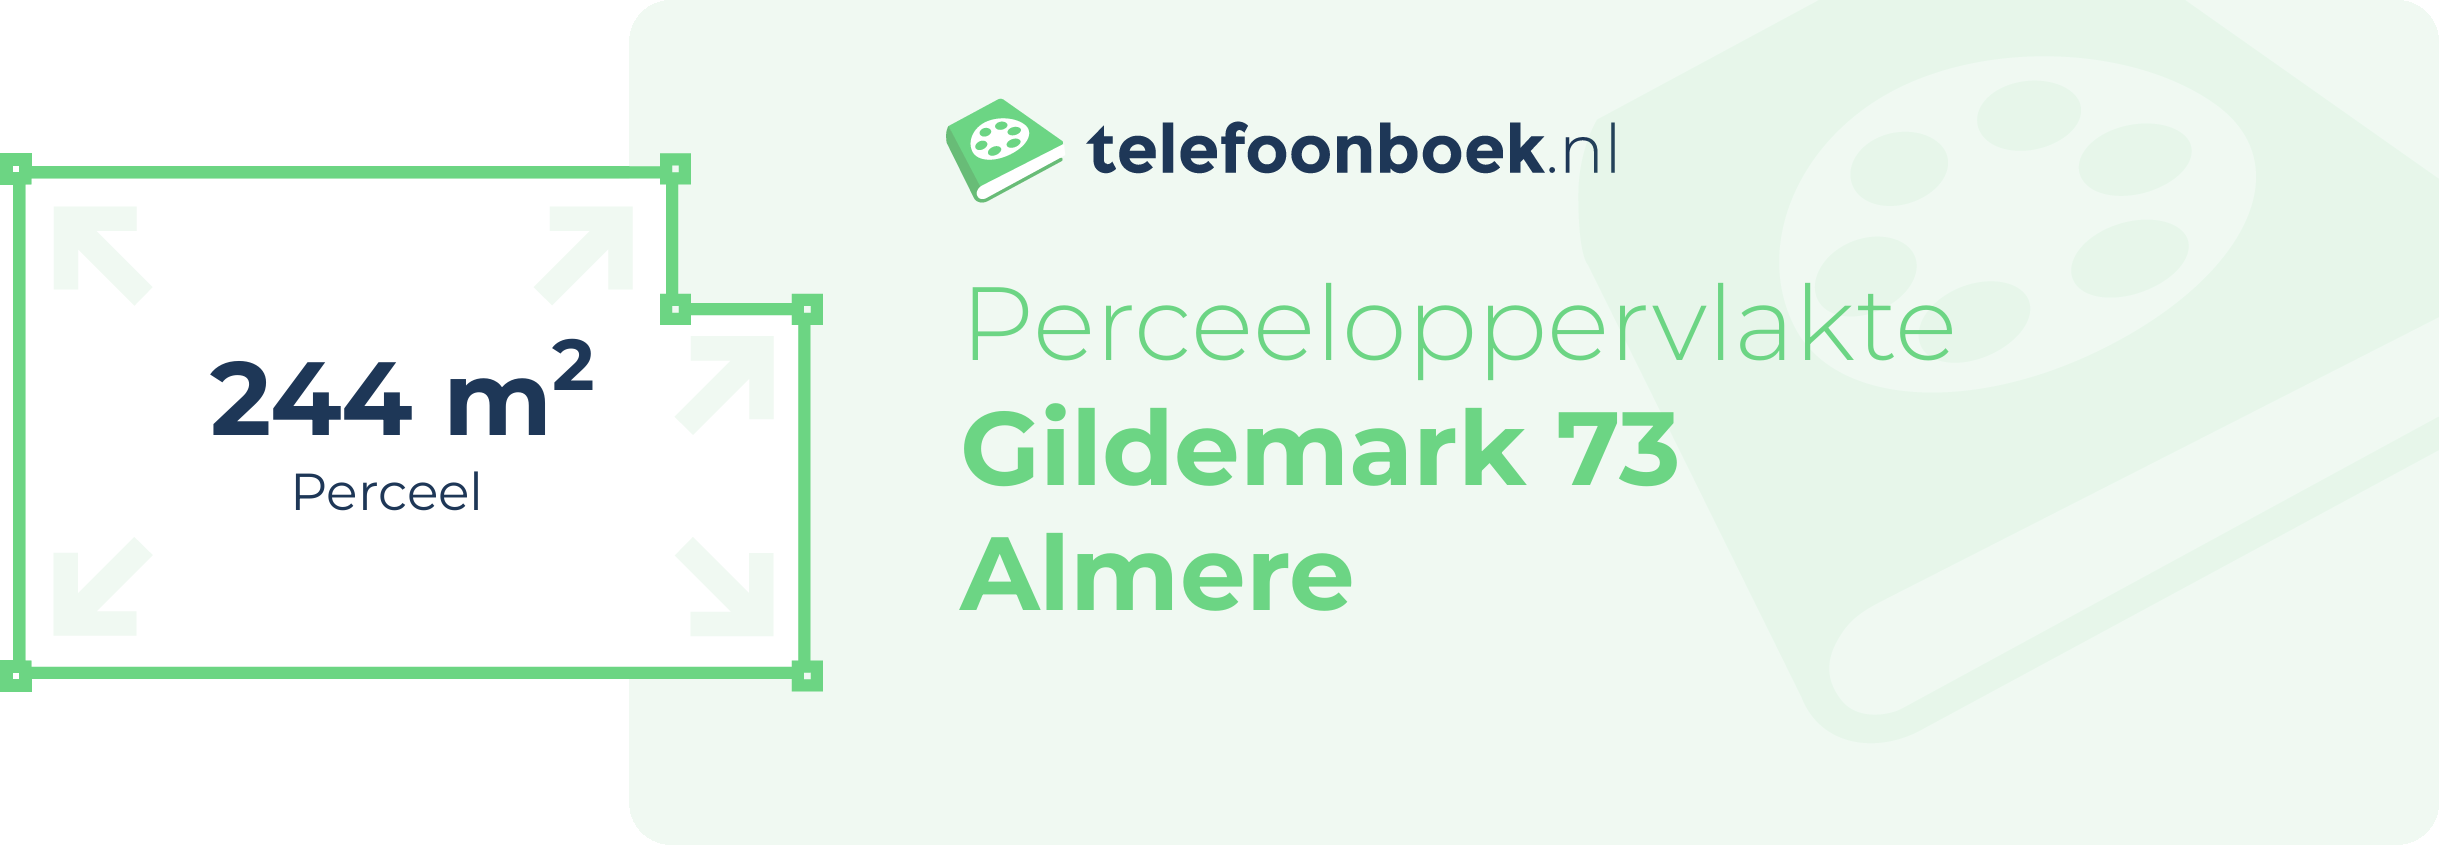 Perceeloppervlakte Gildemark 73 Almere